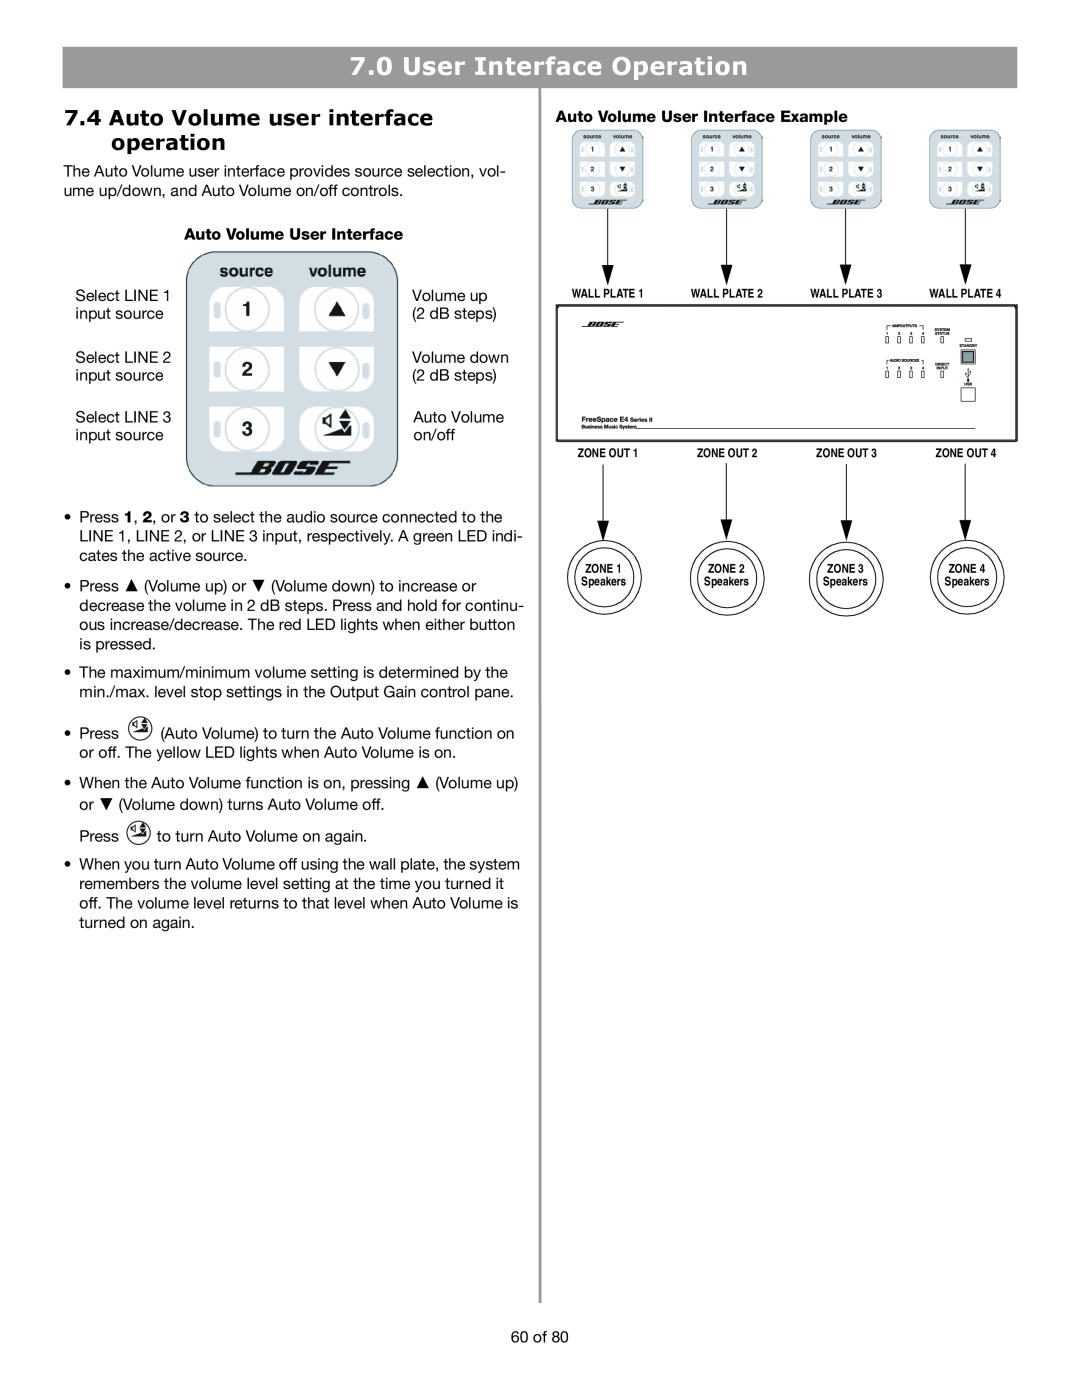 Bose E4 manual 7.4Auto Volume user interface operation, User Interface Operation, Auto Volume User Interface 